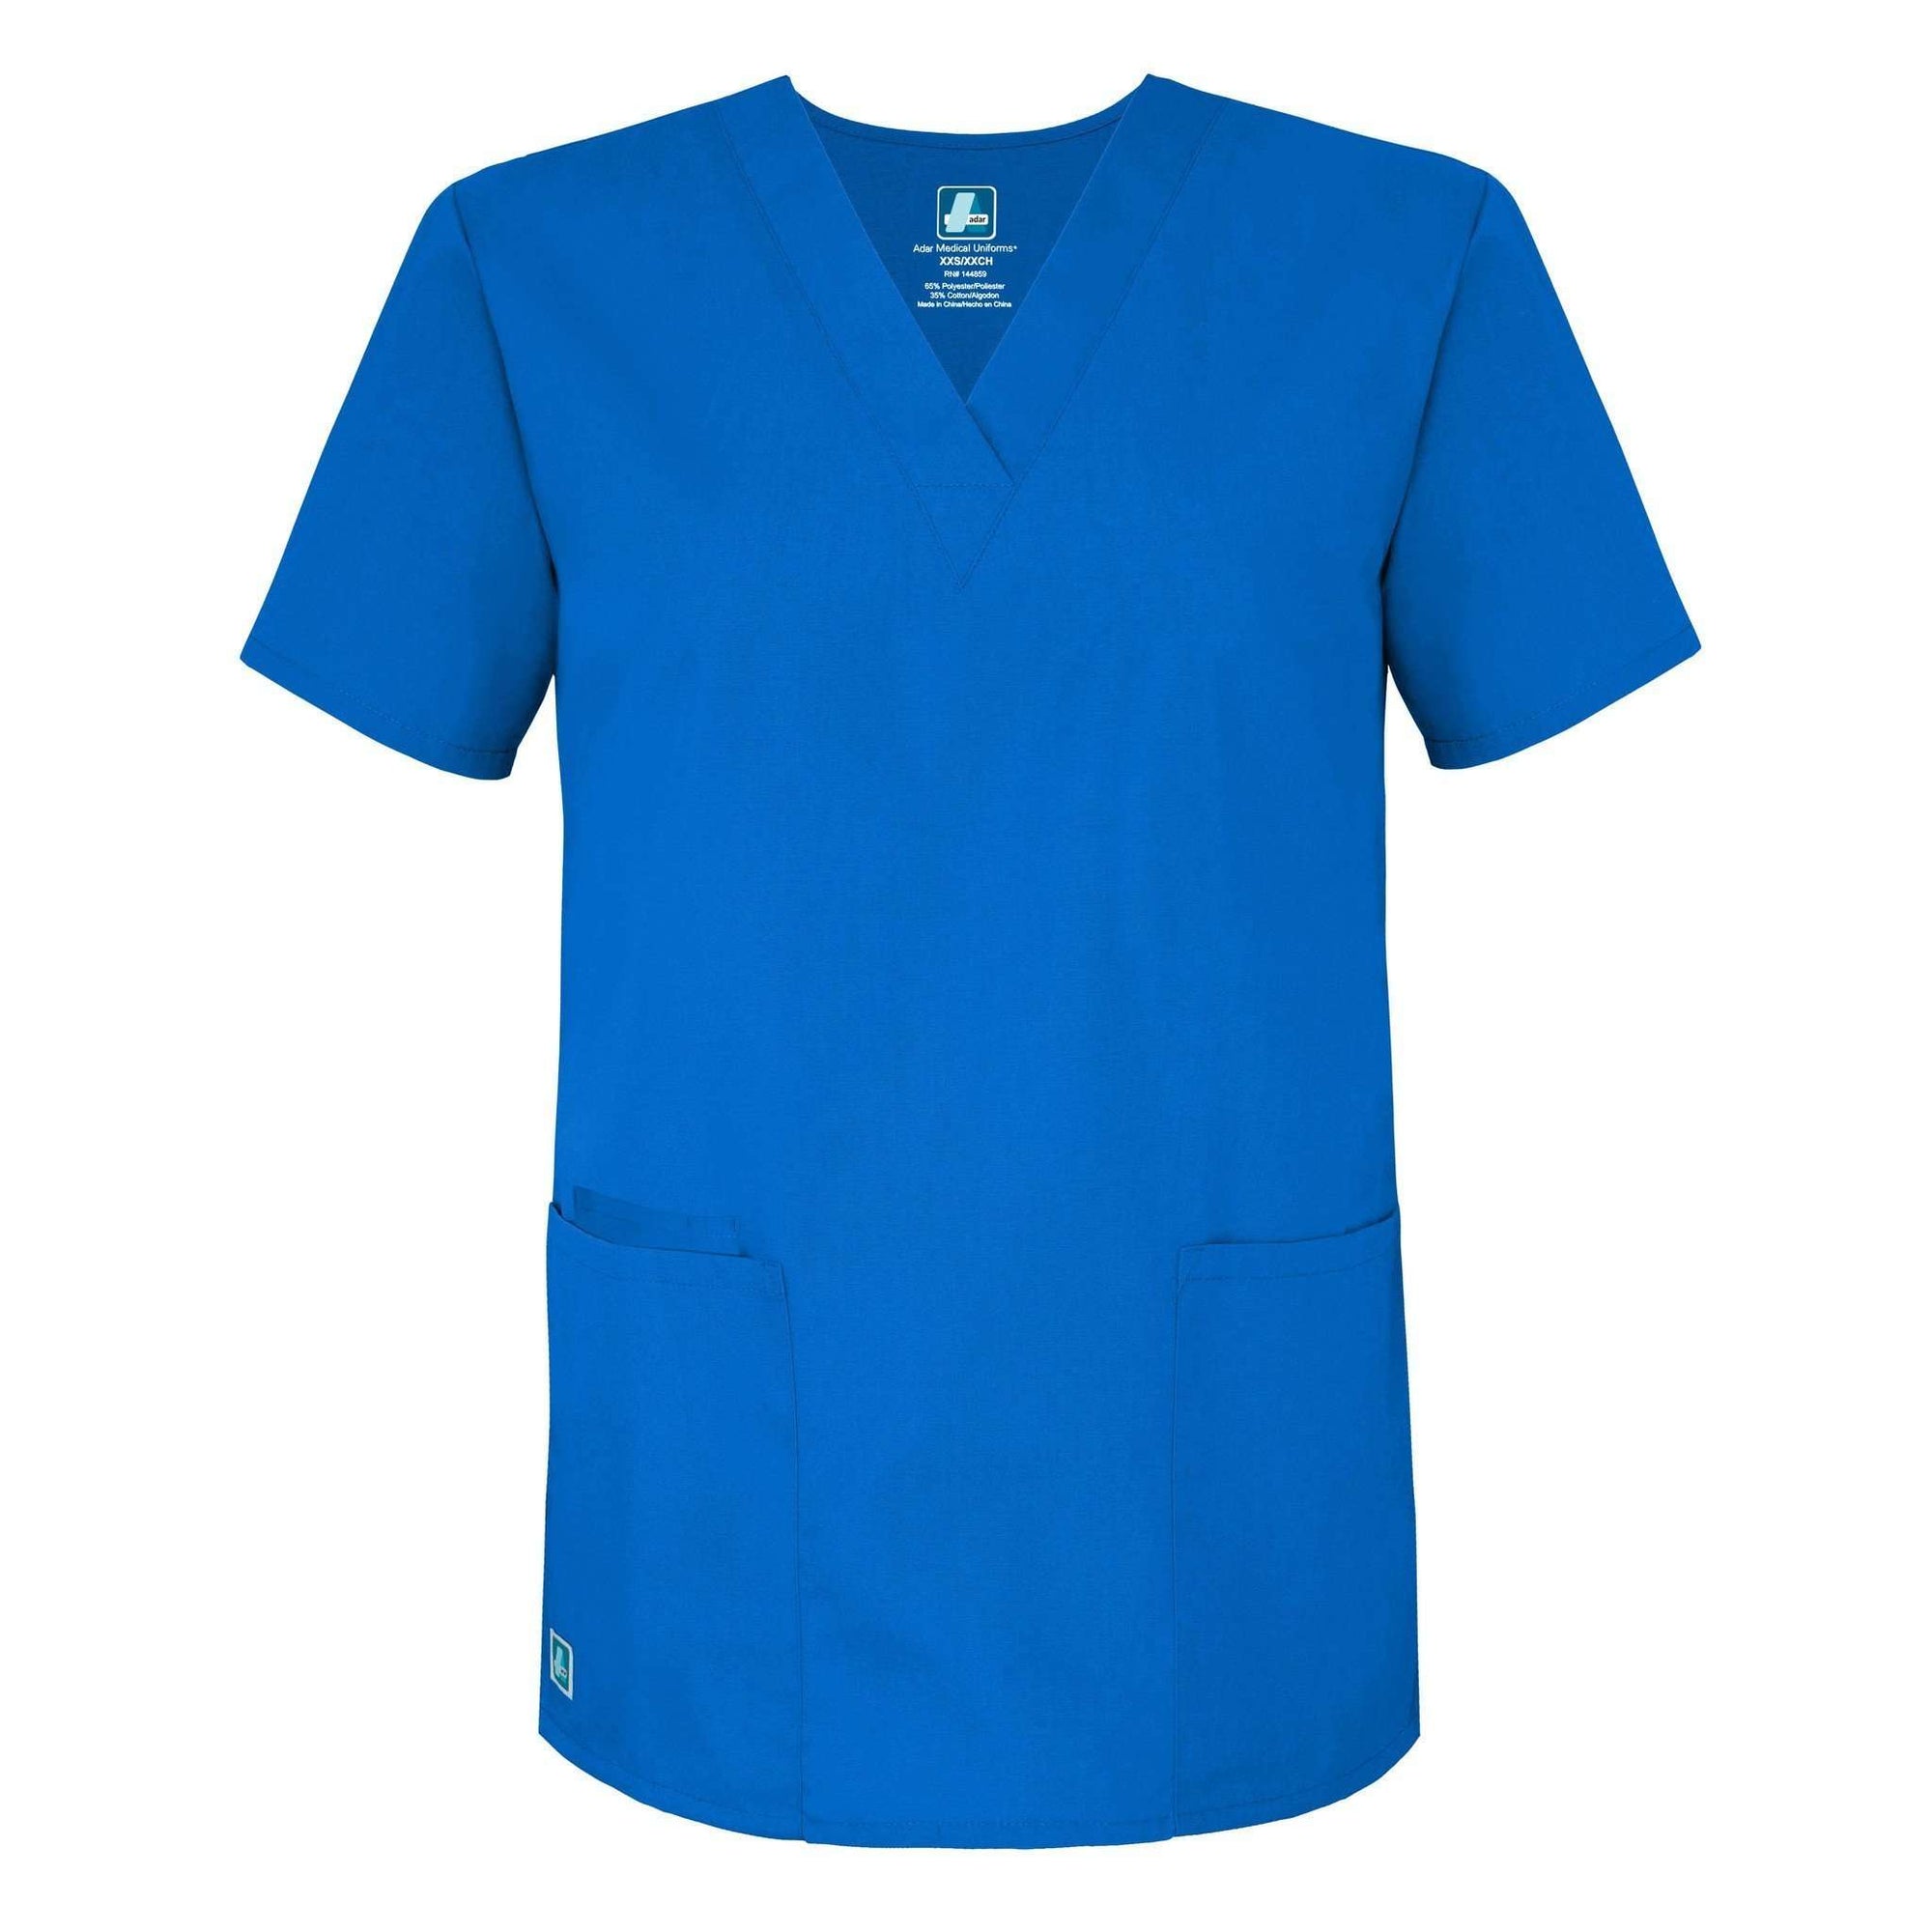  Adar - uniforms Medical Uniform Tops uniforms online Adar Universal Unisex V-Neck 2 Pocket Scrub Top Regal Blue - SchoolUniforms.com